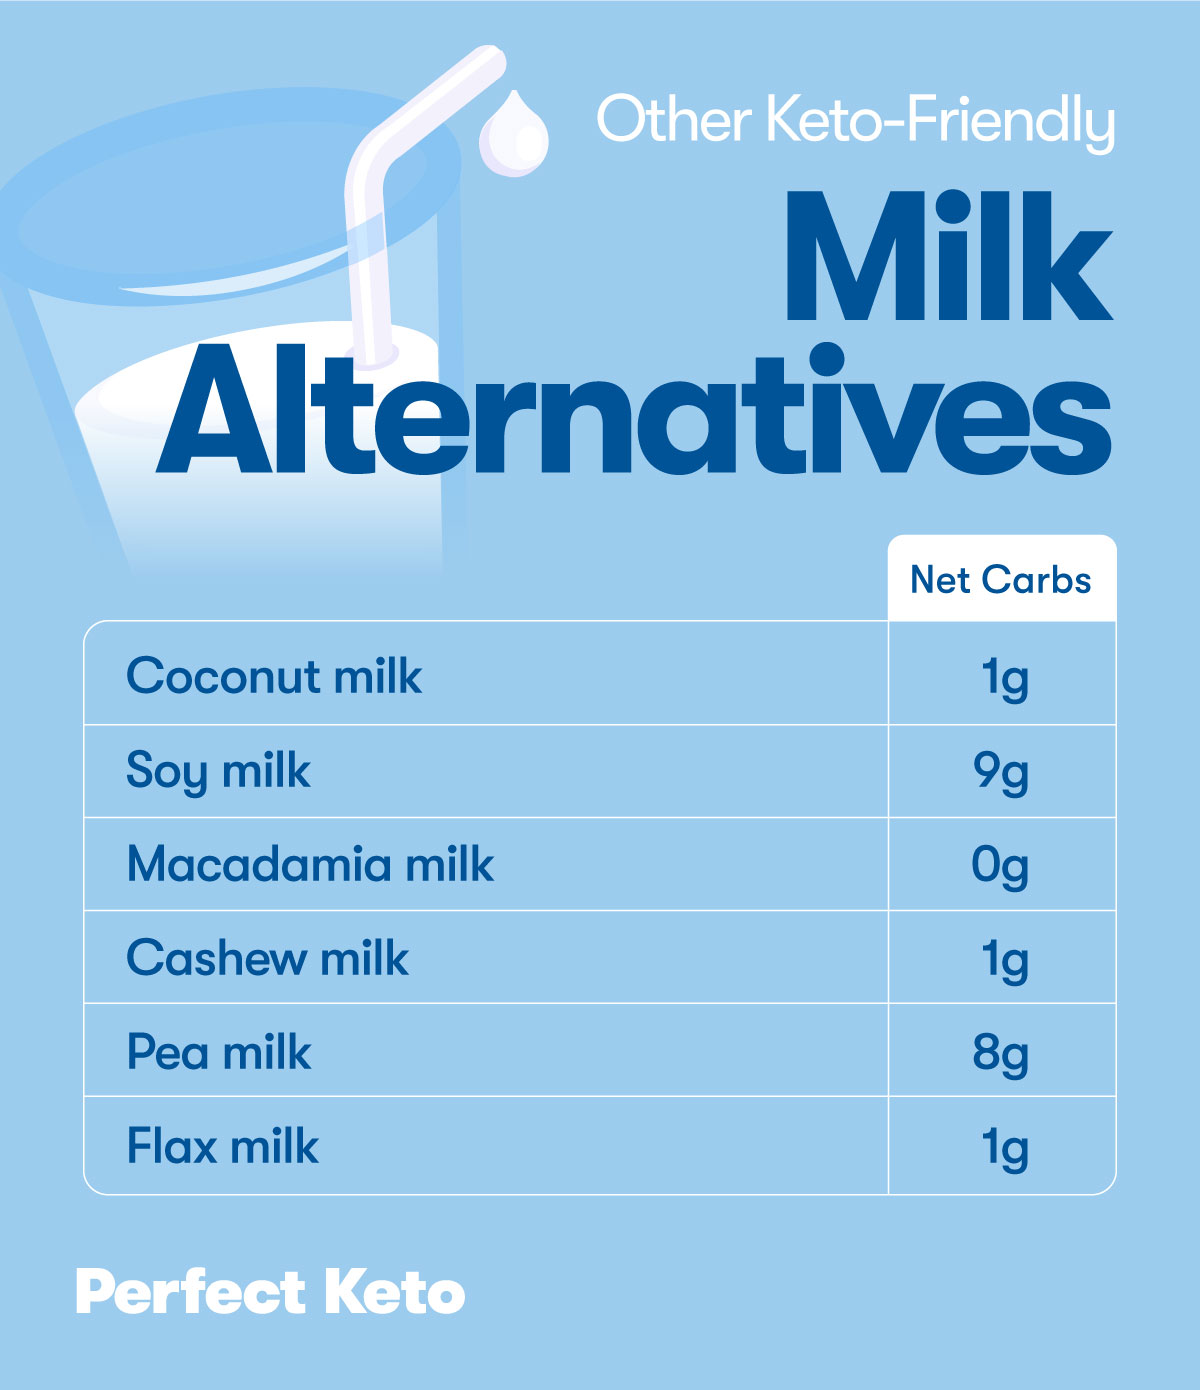 Keto-Friendly Milk Alternatives